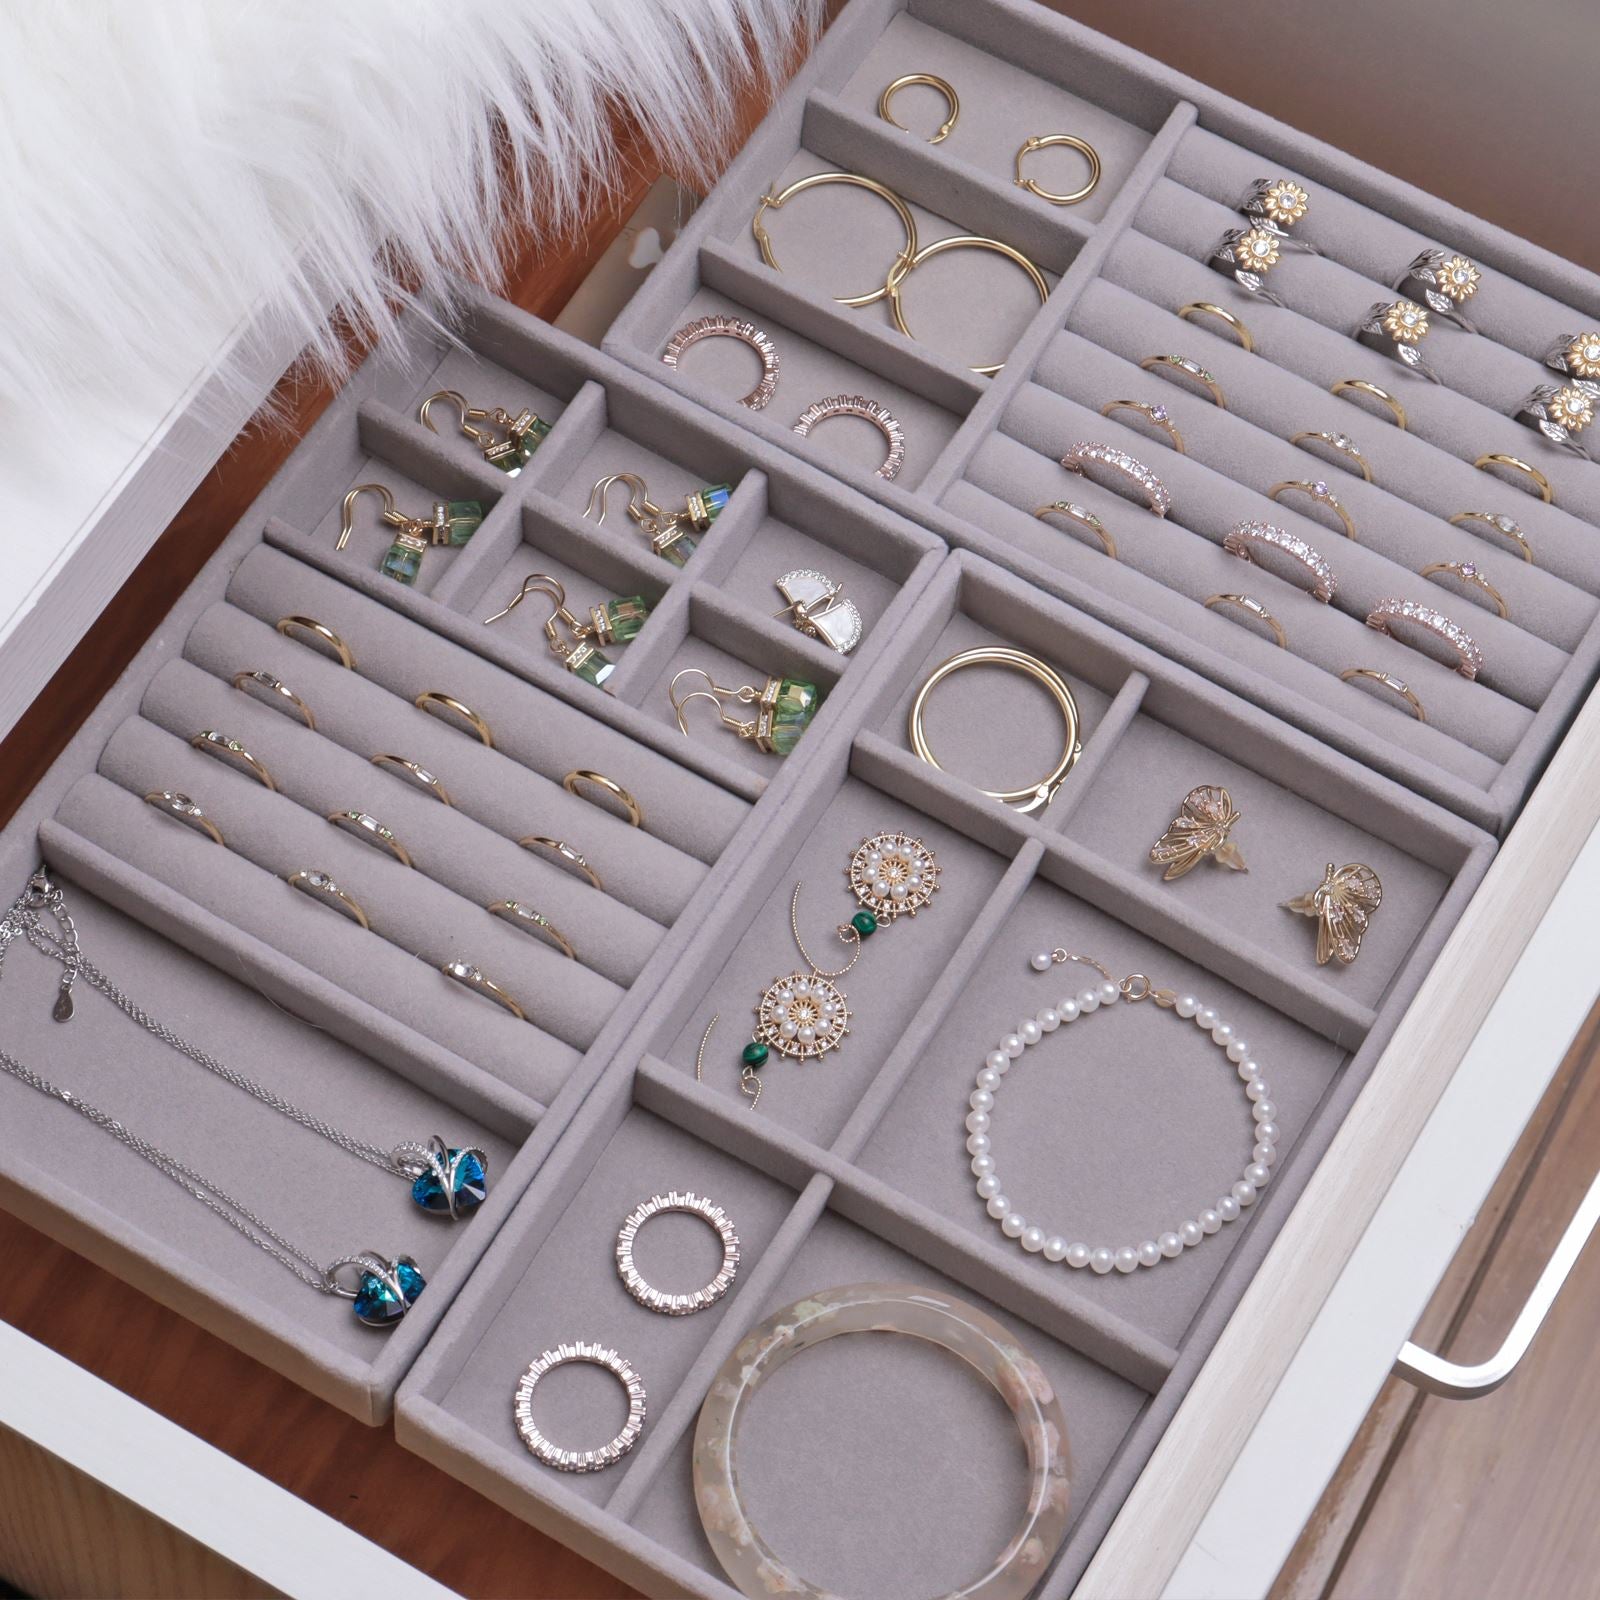 Jewelry Travel Box